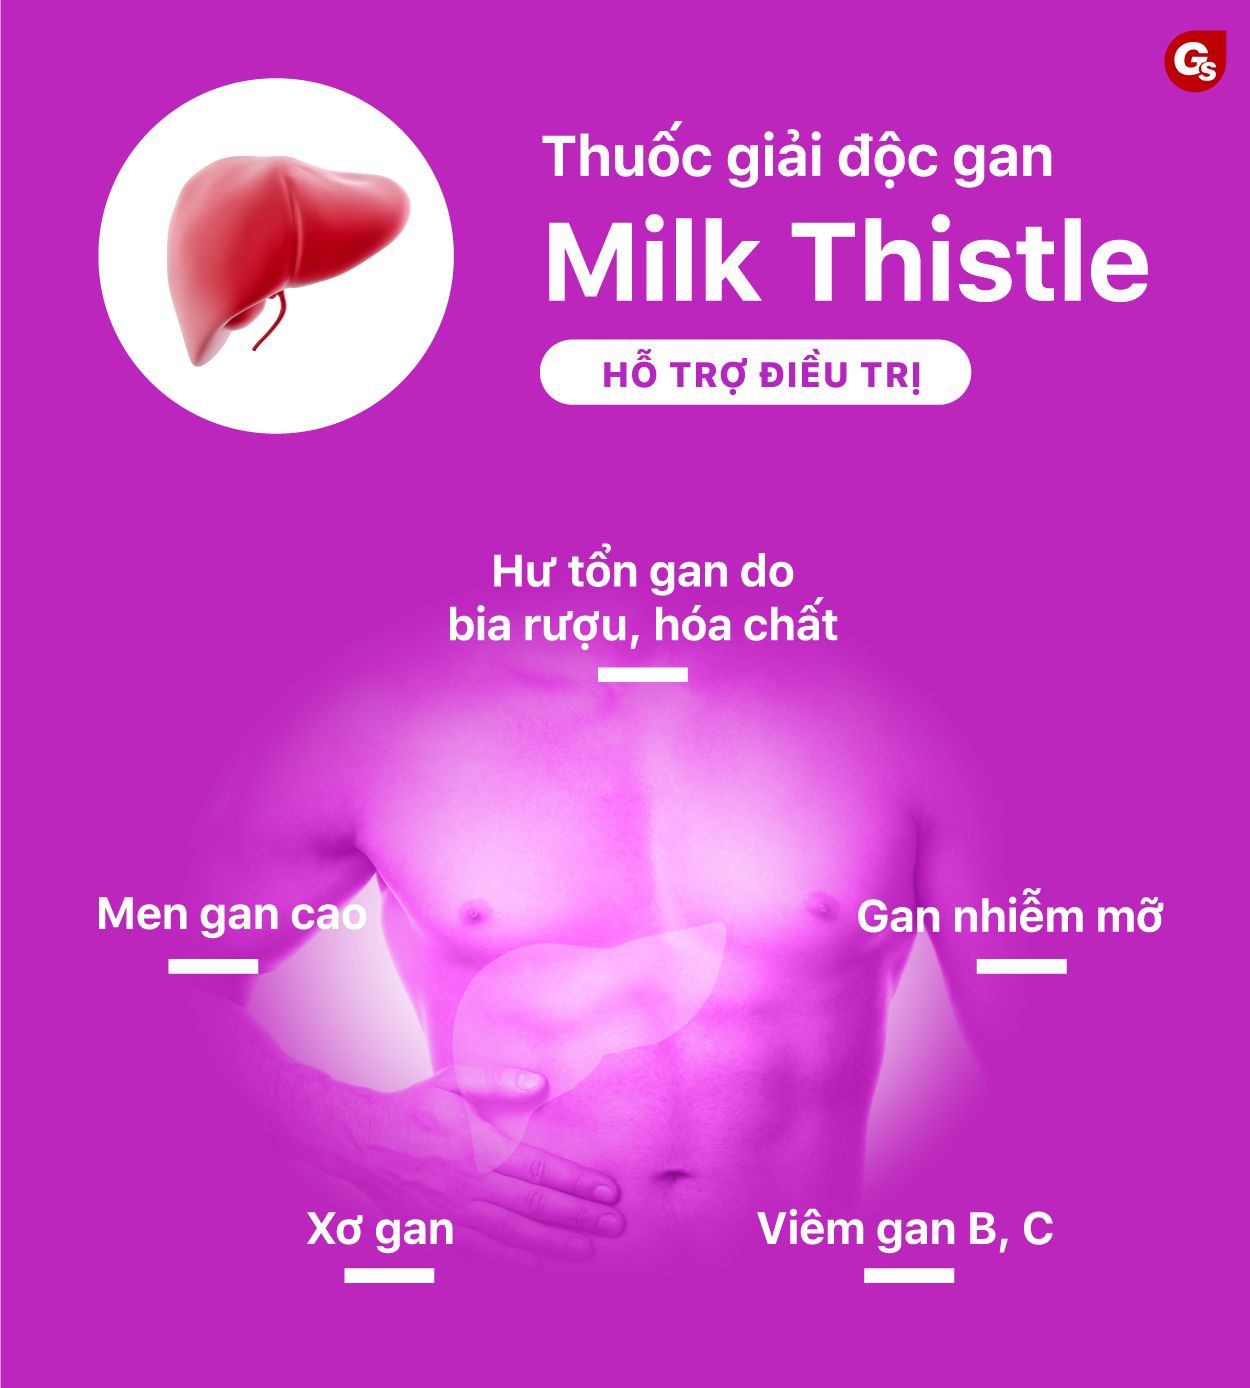 thuoc-giai-doc-gan-milk-thistle-co-tot-khong-gymstore